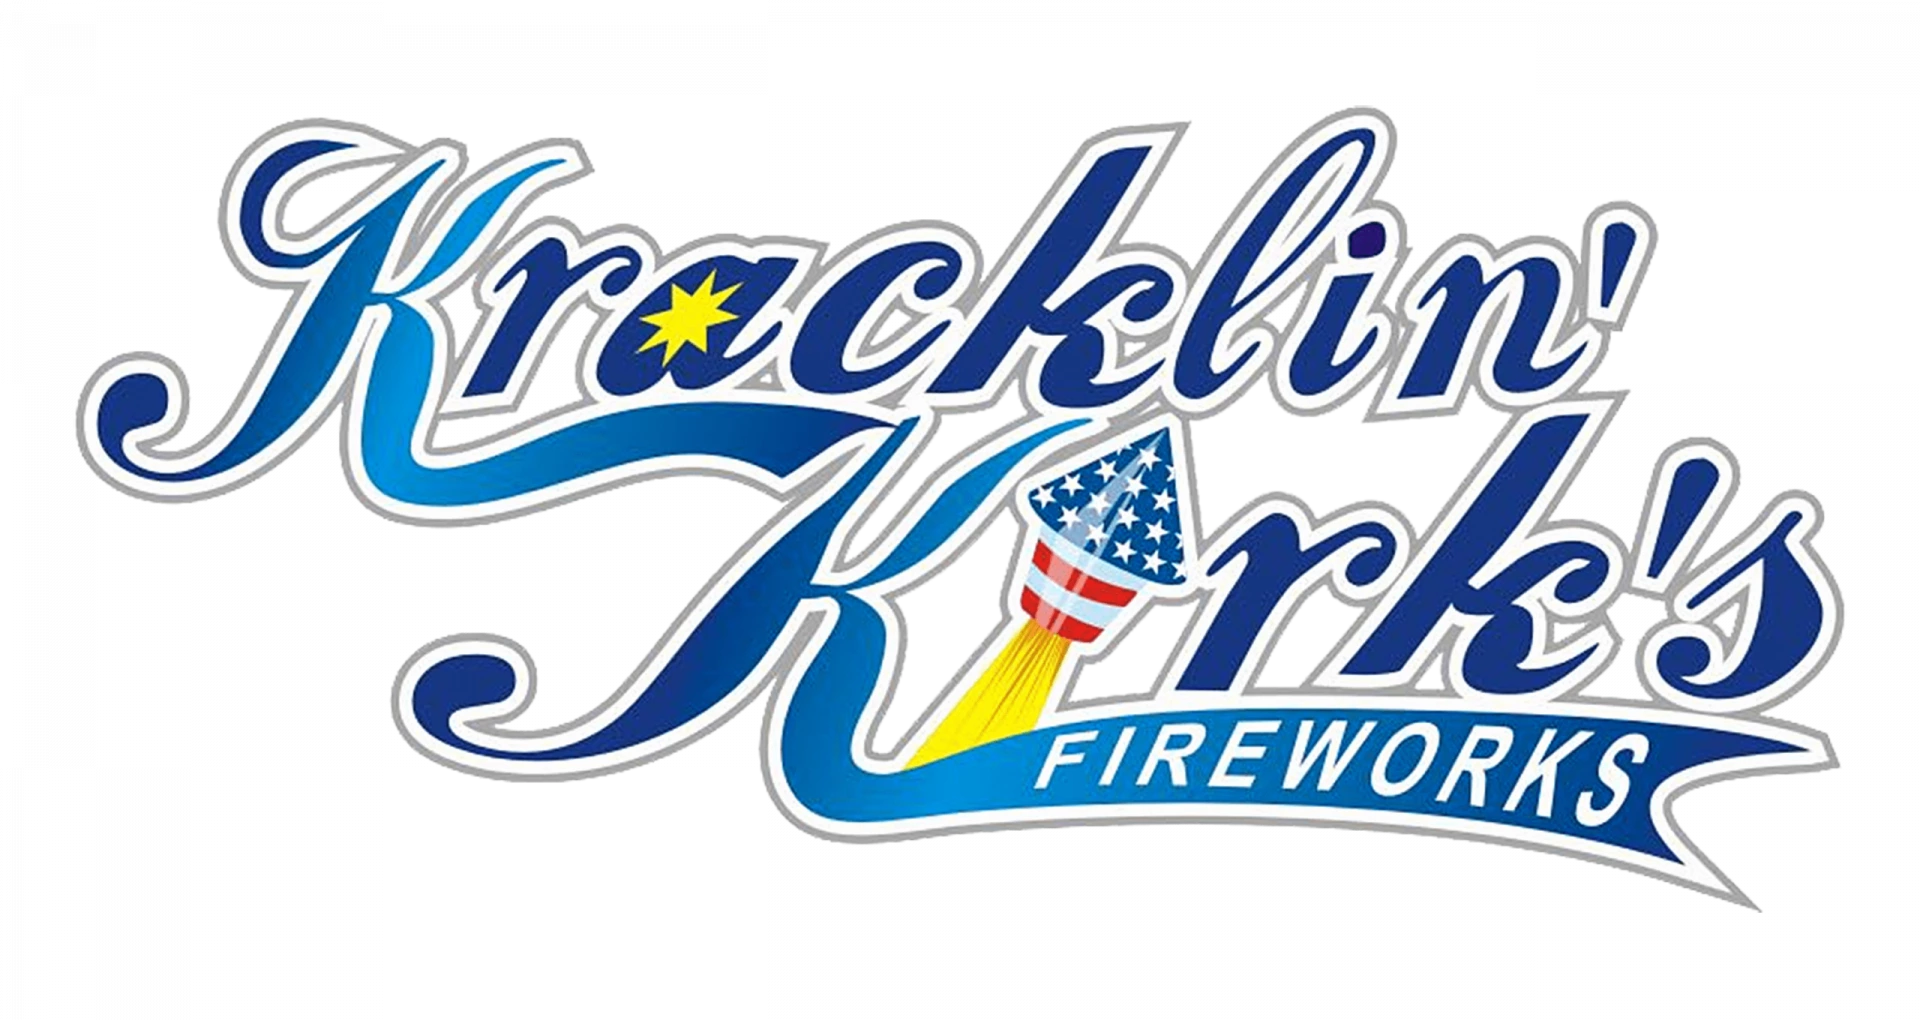 Kracklin' Kirk's Fireworks